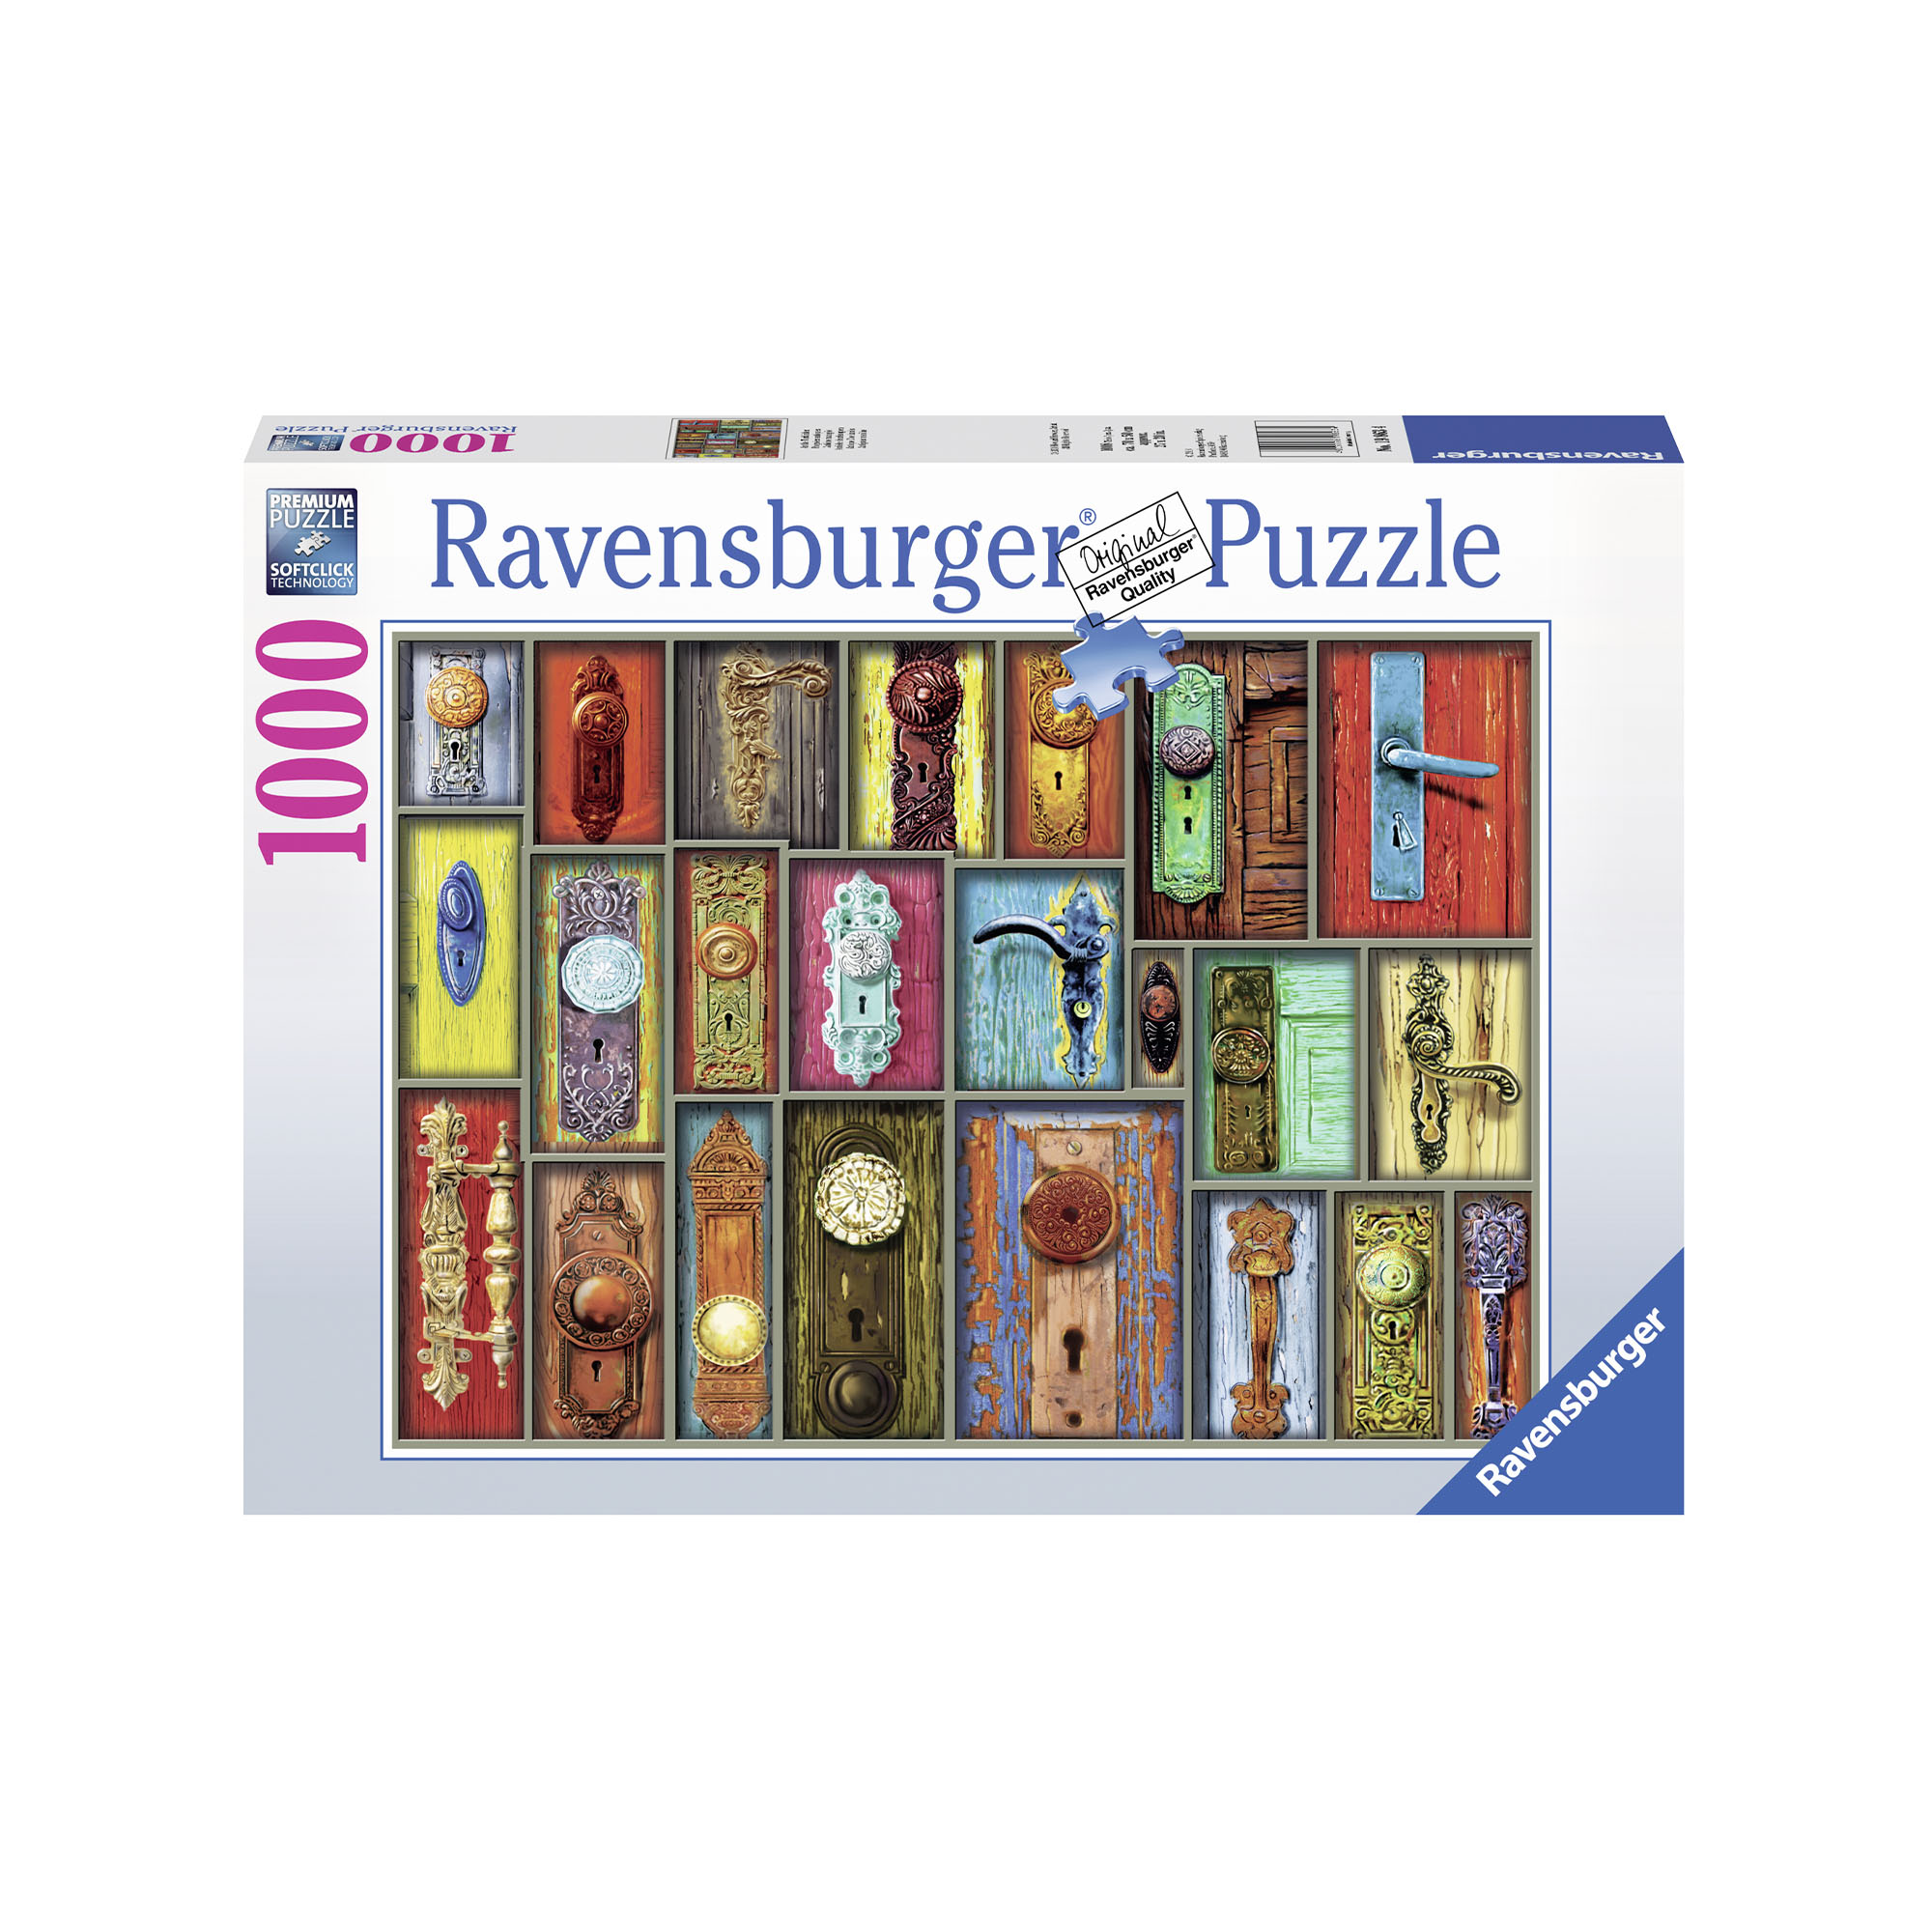 Ravensburger Puzzle 1000 pezzi 19863 - Antiche Maniglie, , large